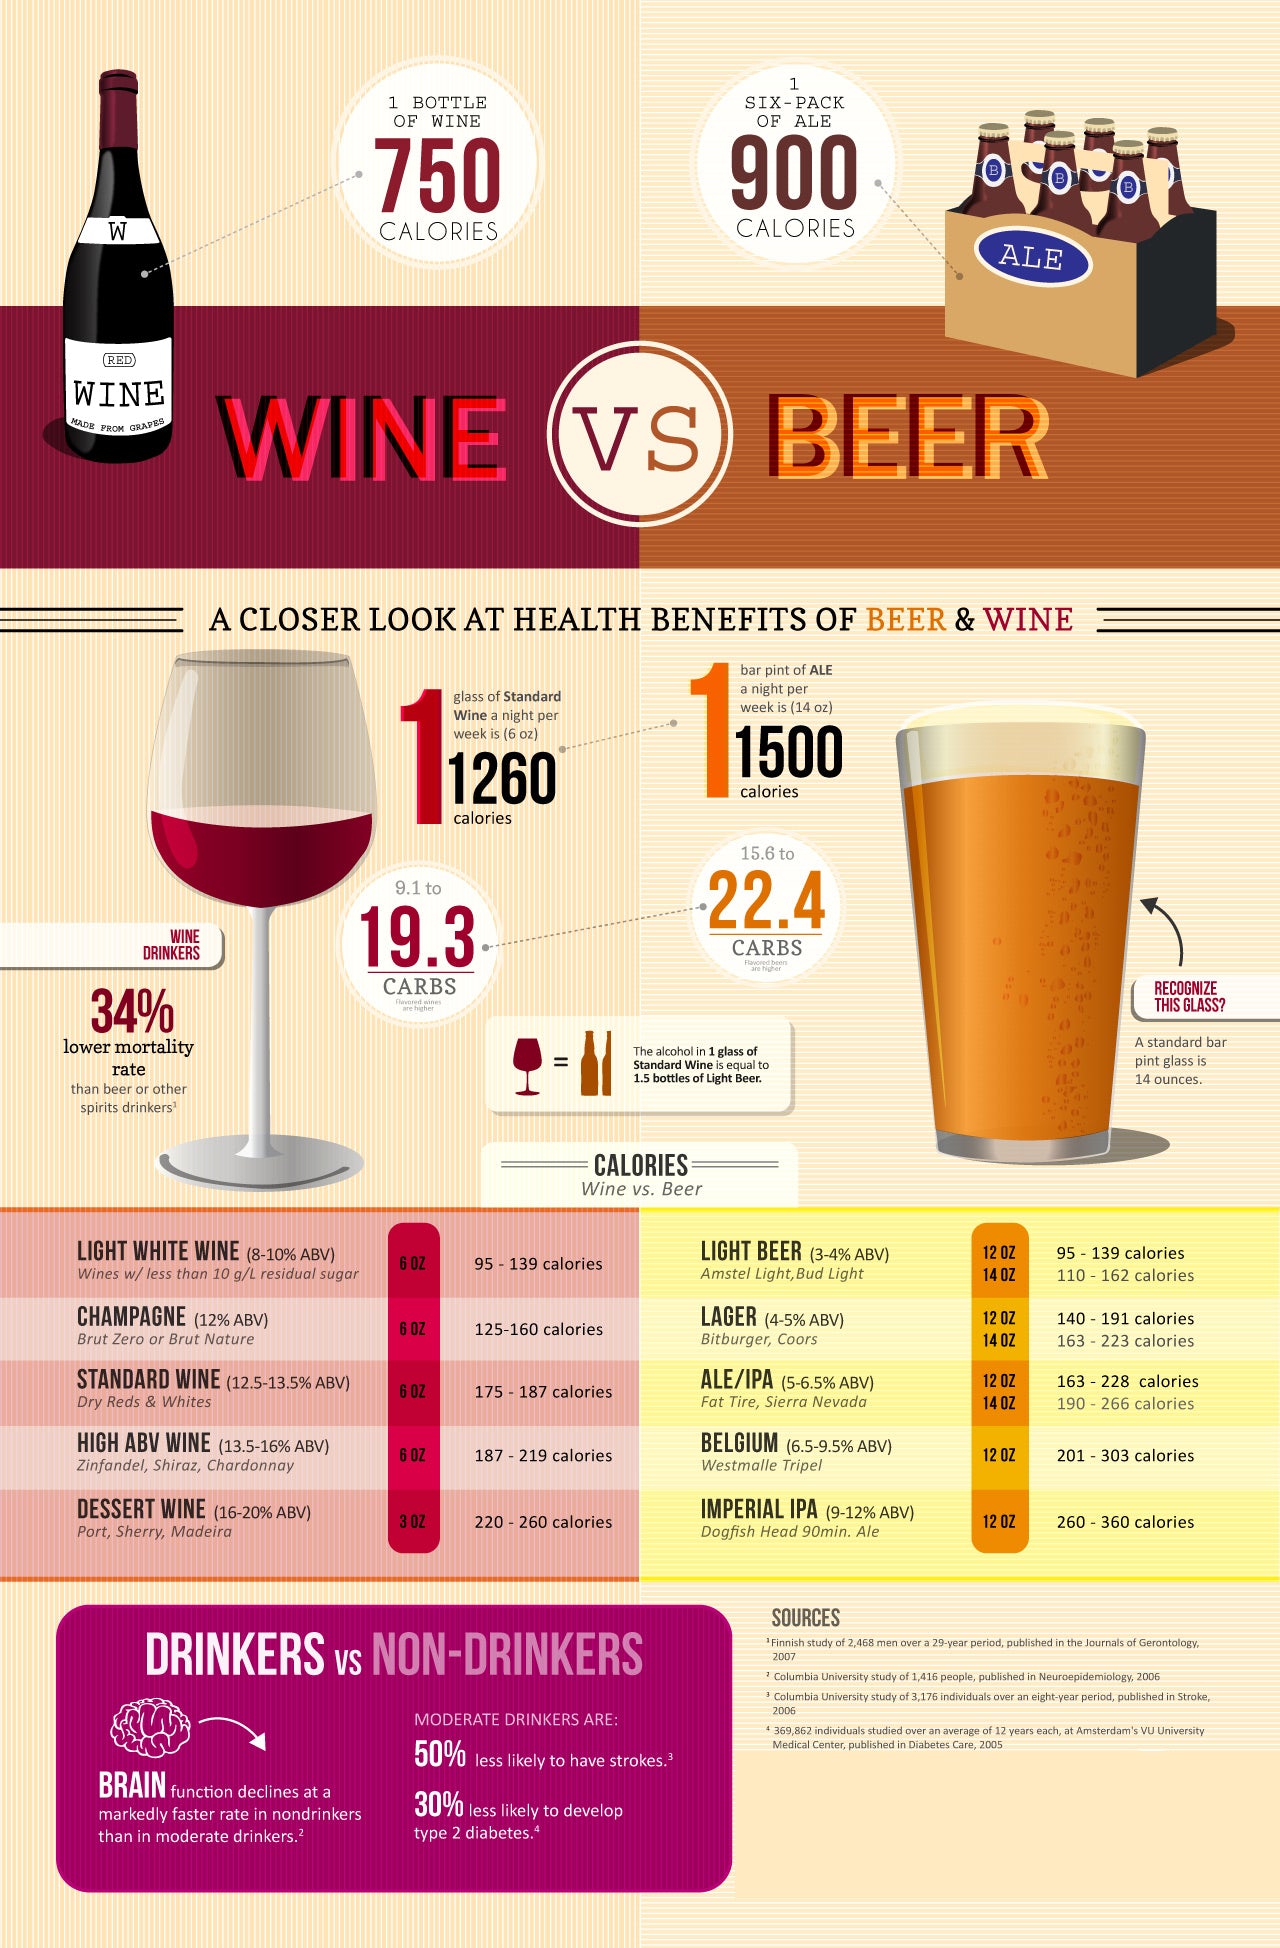 https://cdn.shopify.com/s/files/1/0173/0930/files/wine-vs-beer-infographic_1.jpg?4738